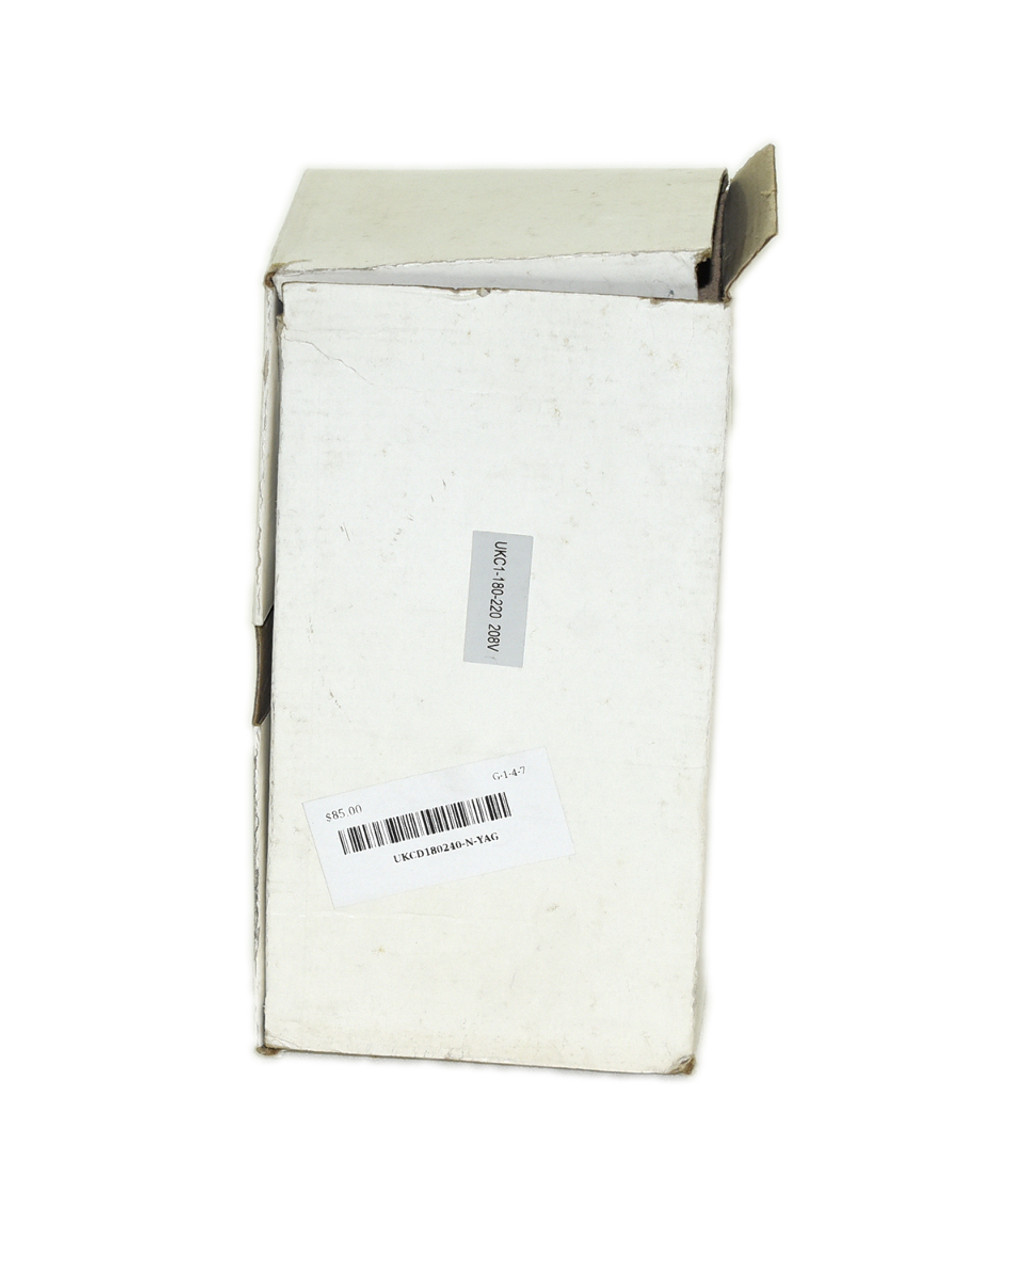 YAGI-Kripal UKCD-180-240 Contactor Coil 220-240V 60Hz